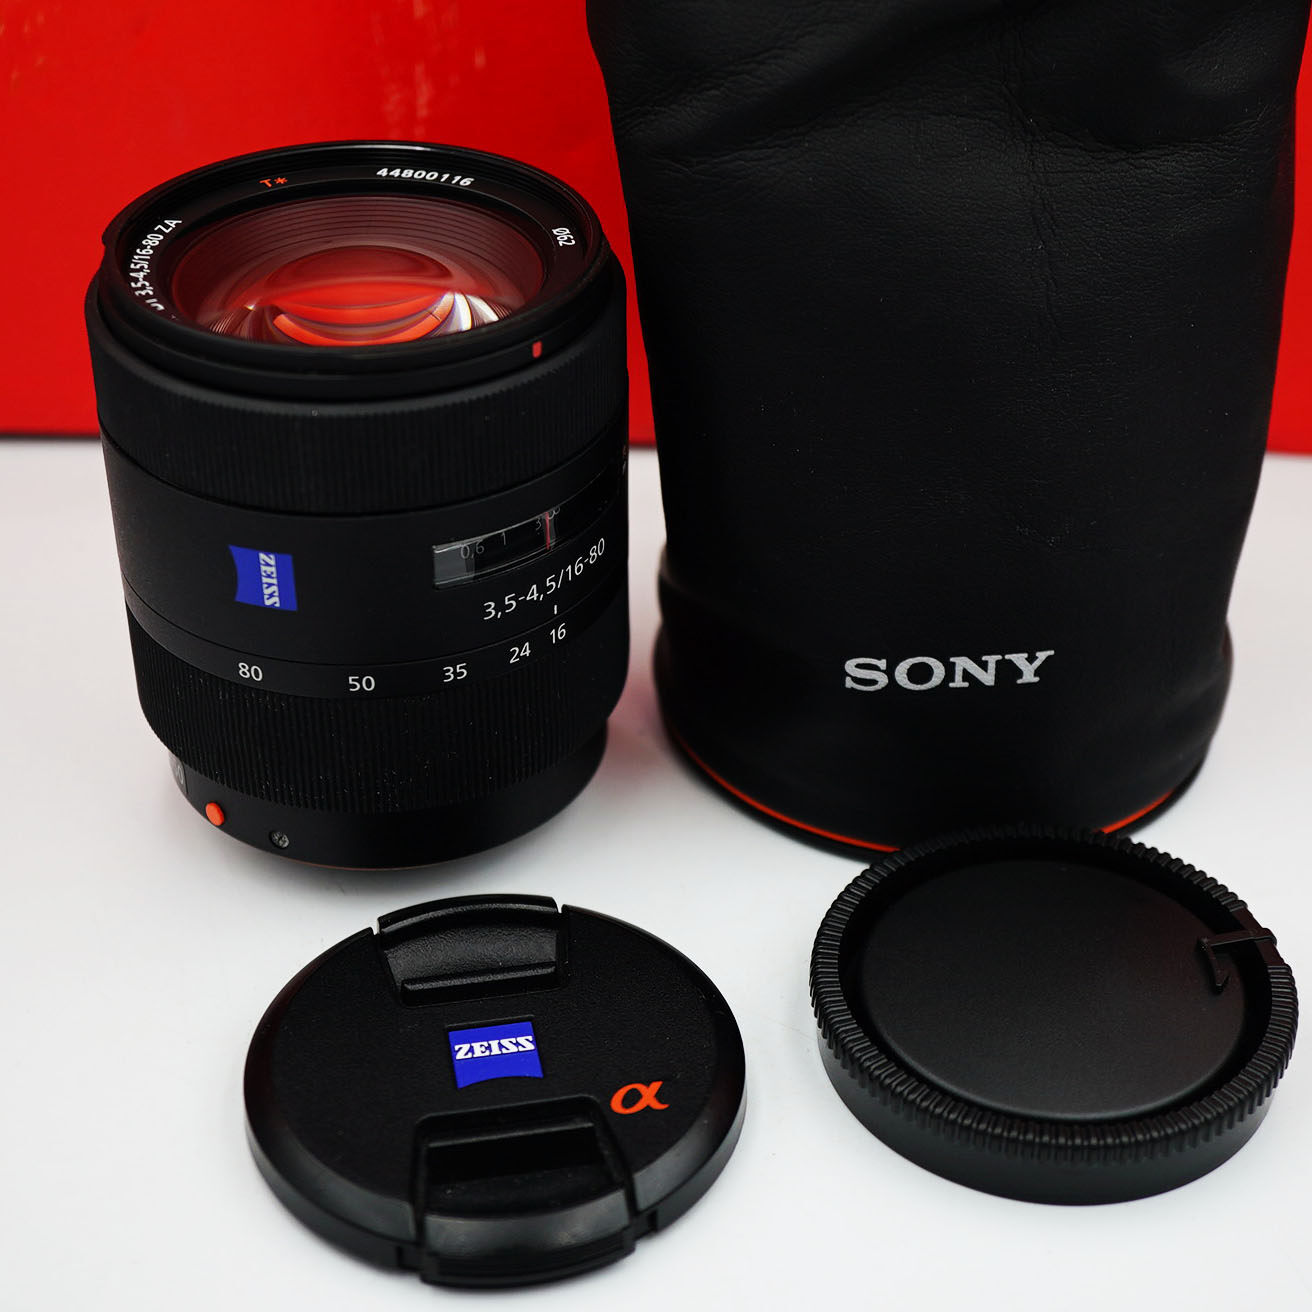 Carl Zeiss Sony Vario-Sonnar T* DT 16-80mm f/3.5-4.5 ZA Lens